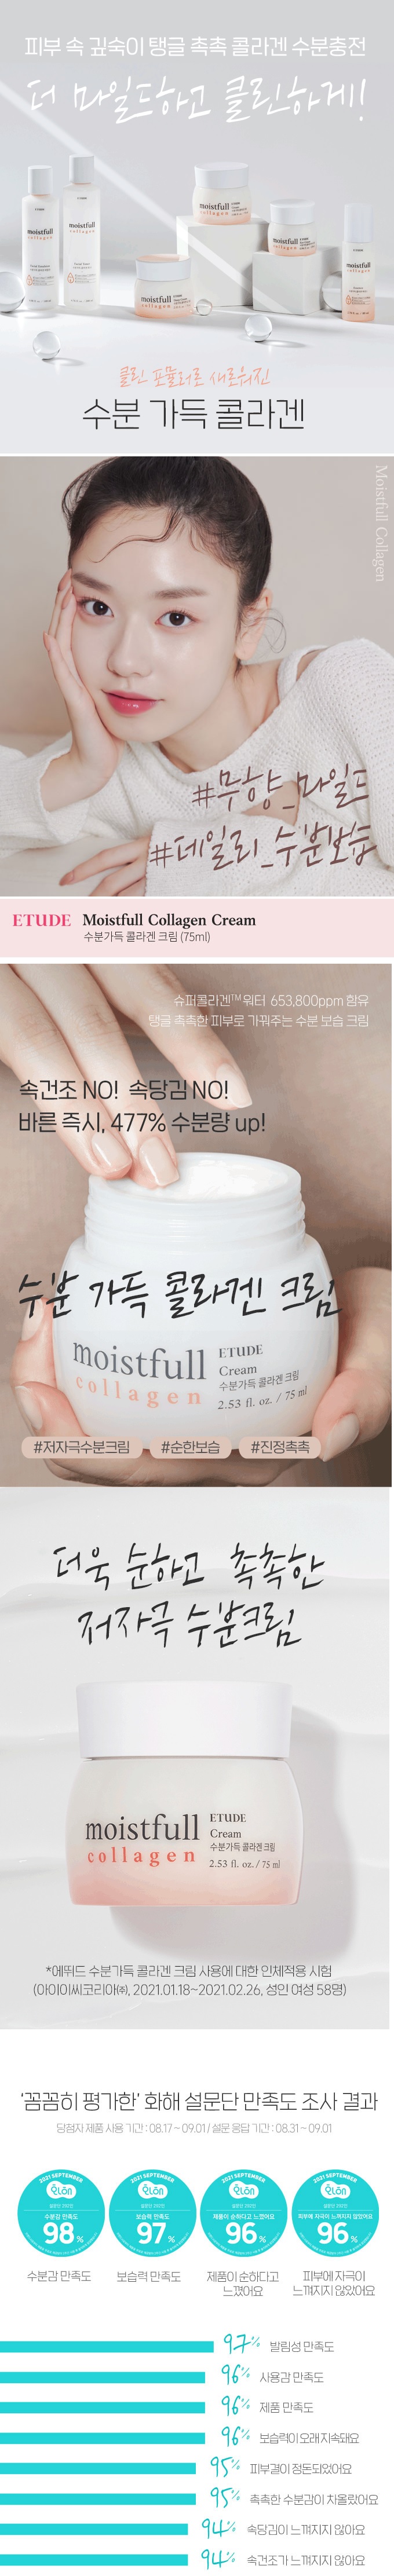 Etude House Moistfull Collagen Cream korean skincare product online shop malaysia china macau2